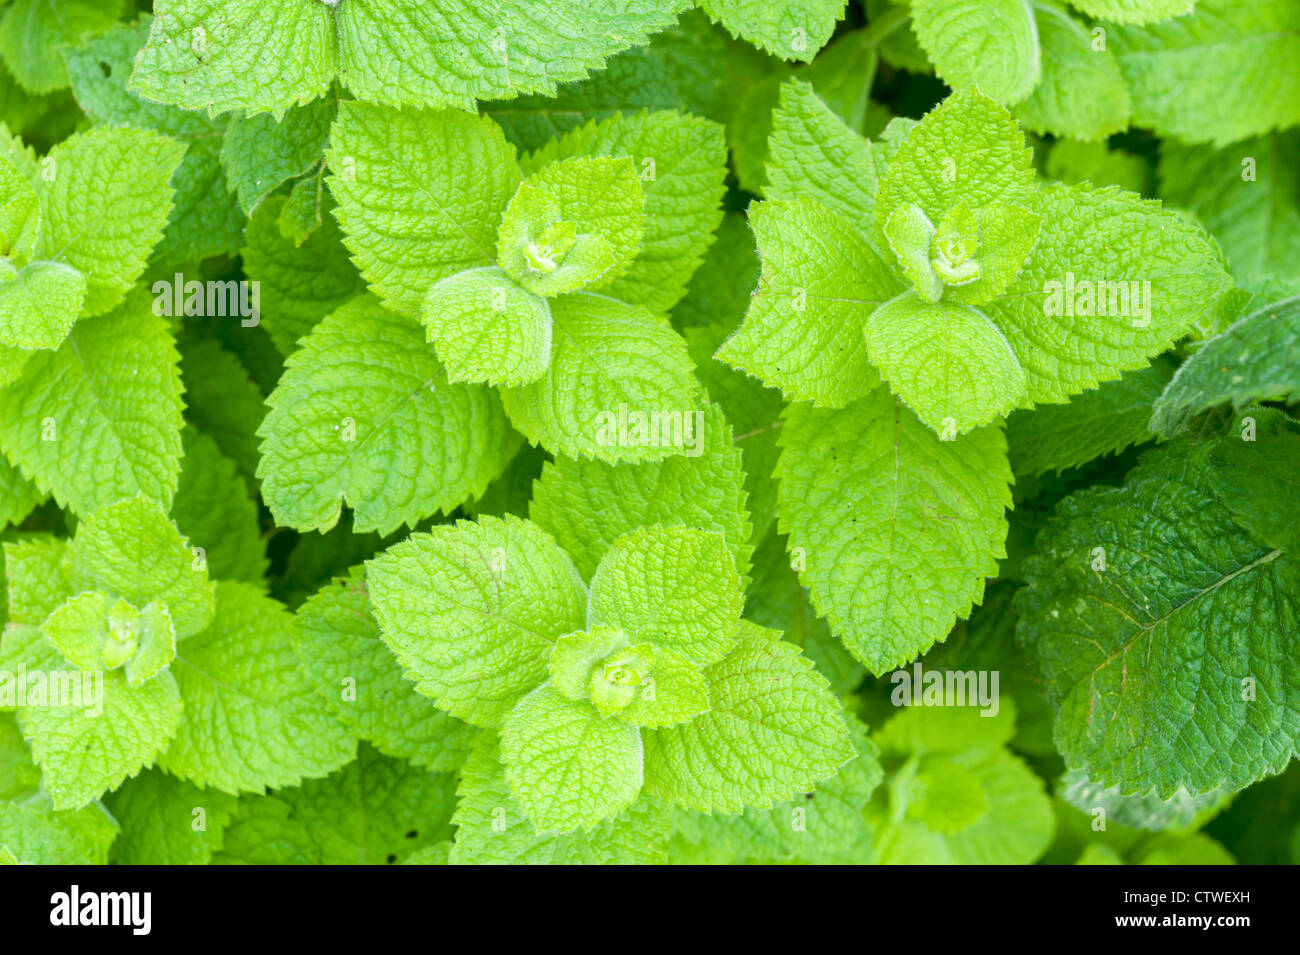 Apple mint plants in a garden in the UK Stock Photo